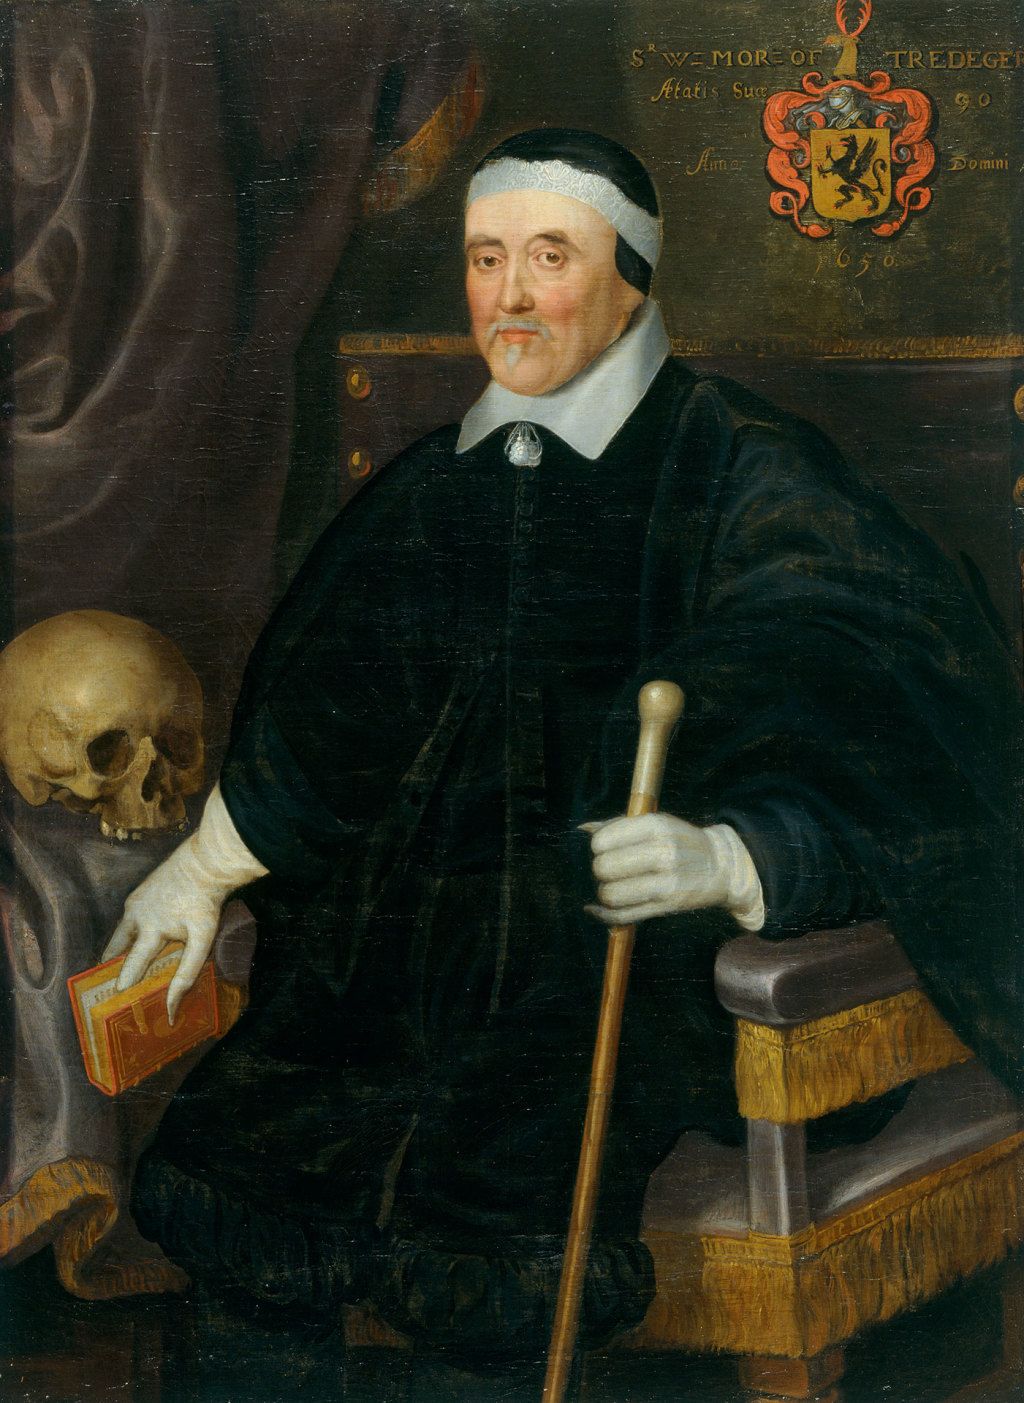 Syr William Morgan (1540-1653)